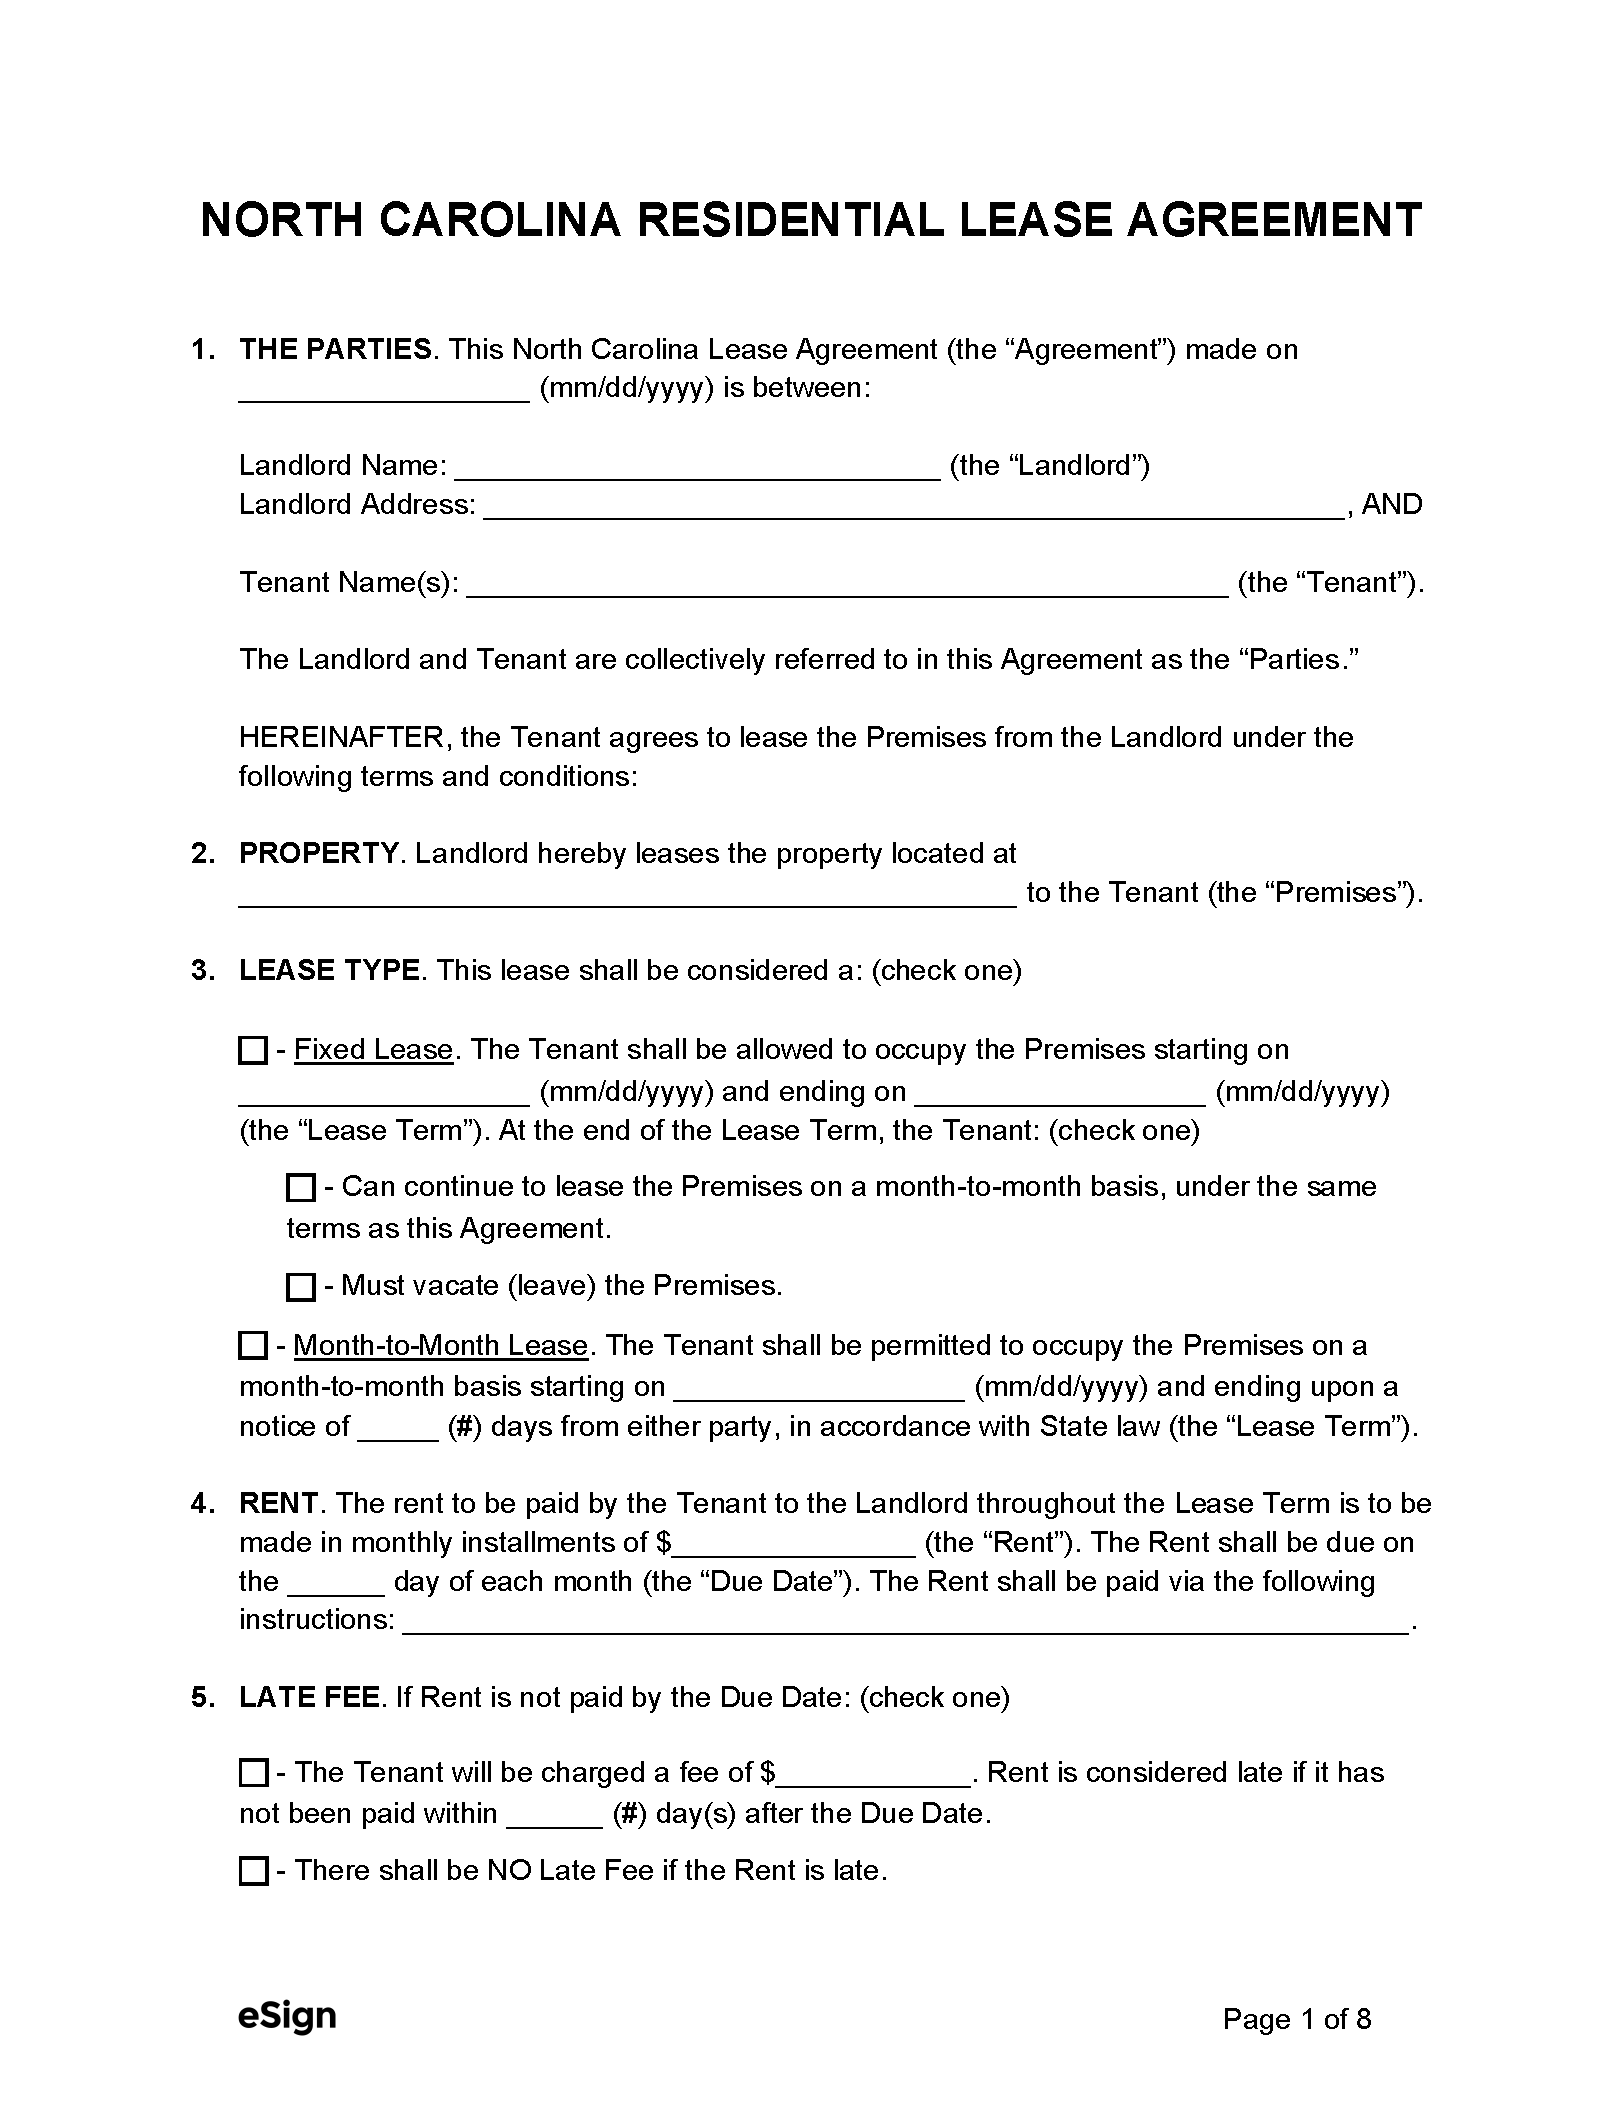 Free North Carolina Rental Lease Agreement Templates (6) PDF Word